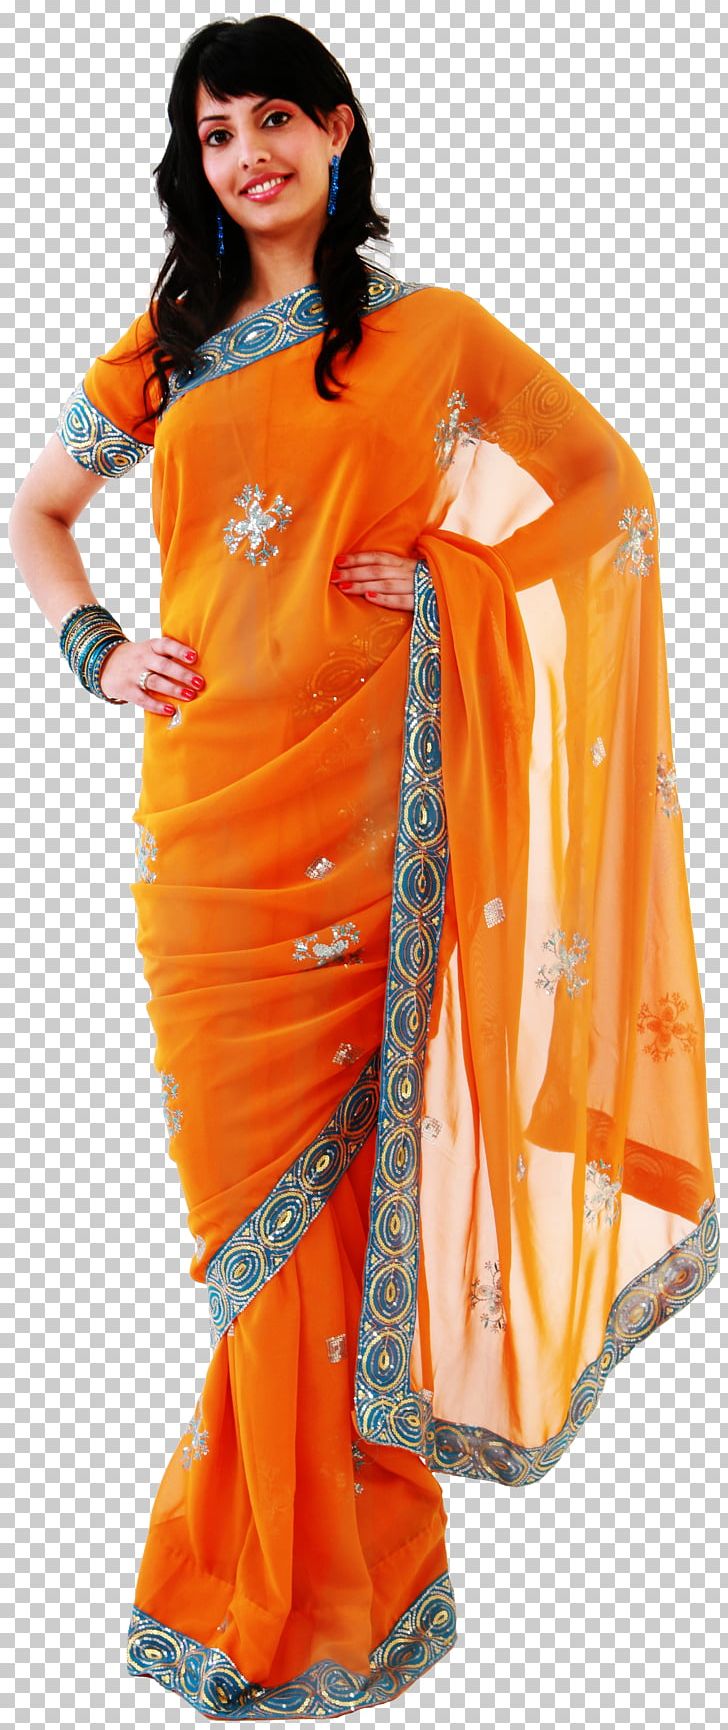 Sari Shoulder Orange S.A. Woman Costume PNG, Clipart, Abdomen, Clothing, Costume, Female, Orange Free PNG Download